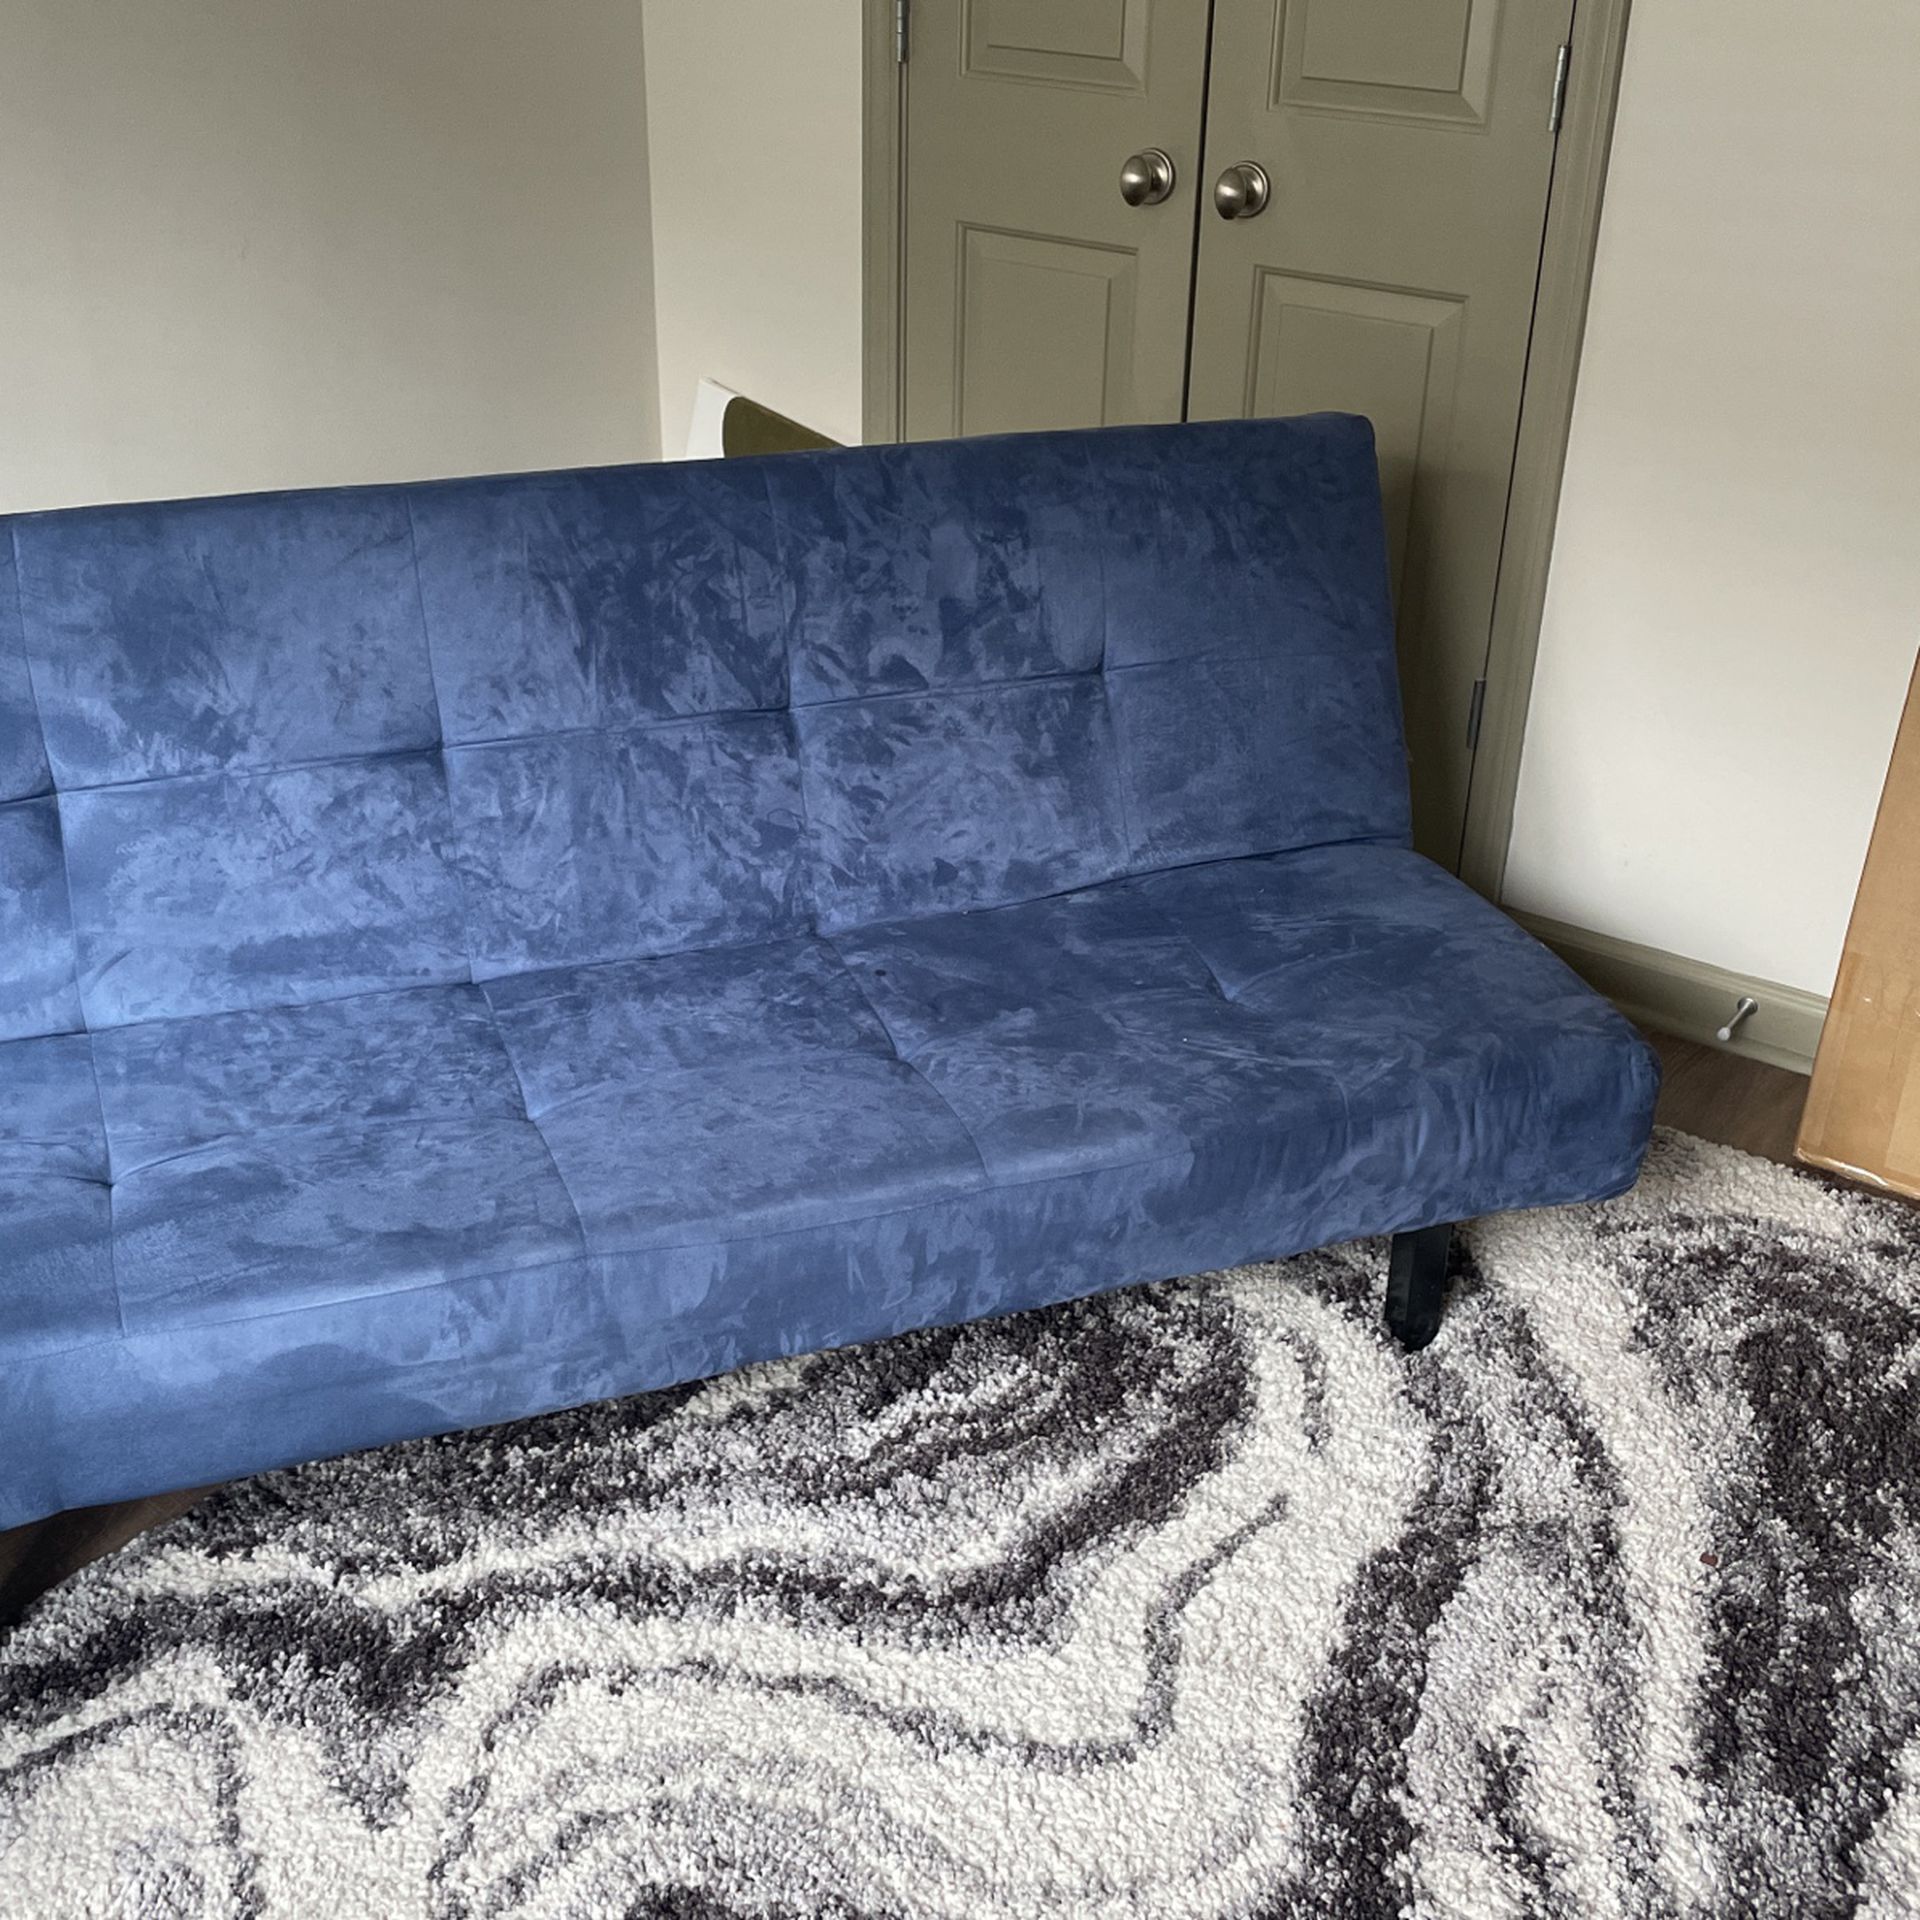 Balkarp Sleeper Sofa Futon For